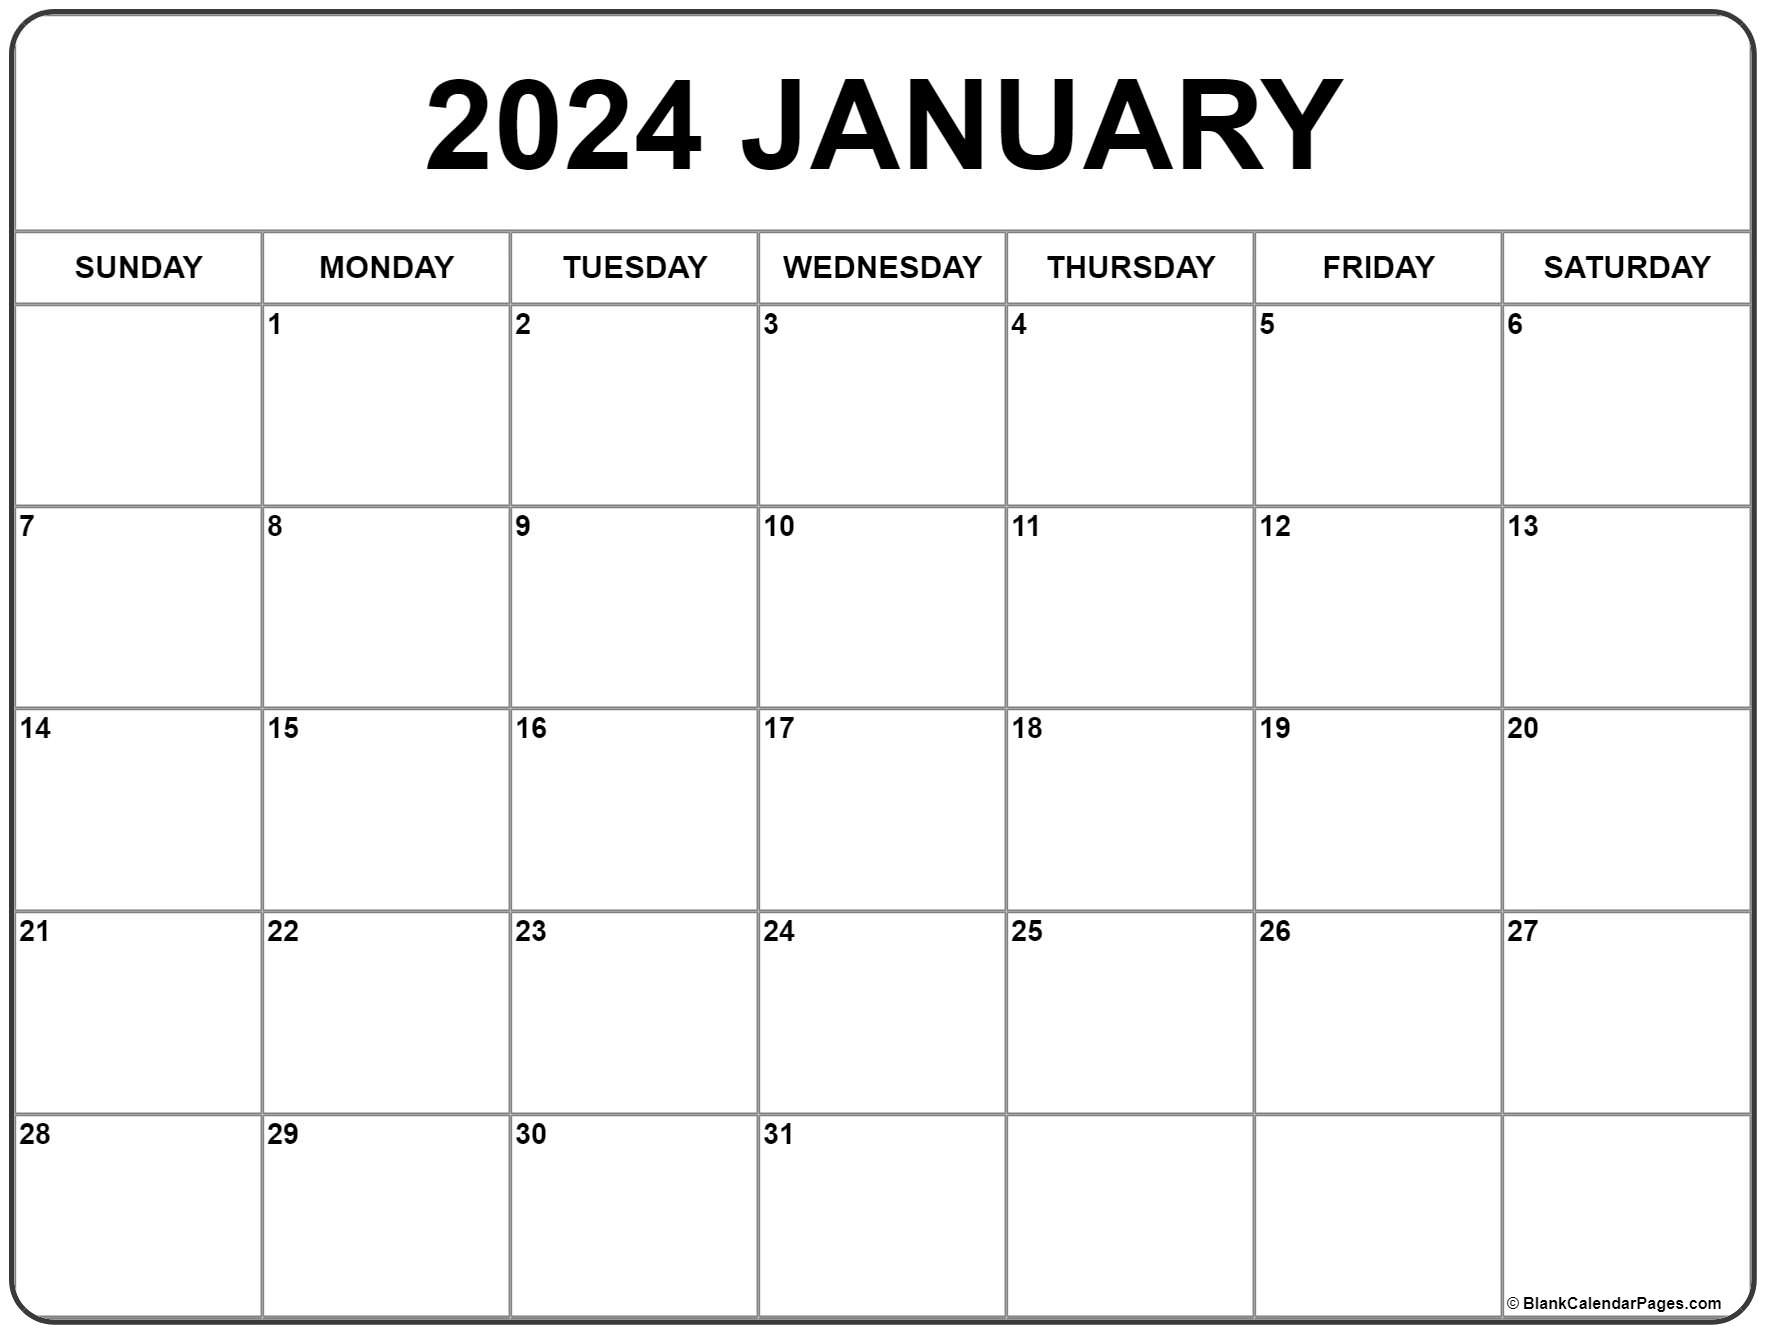 January 2024 Calendar | Free Printable Calendar for 2024 Calendar Monthly Printable